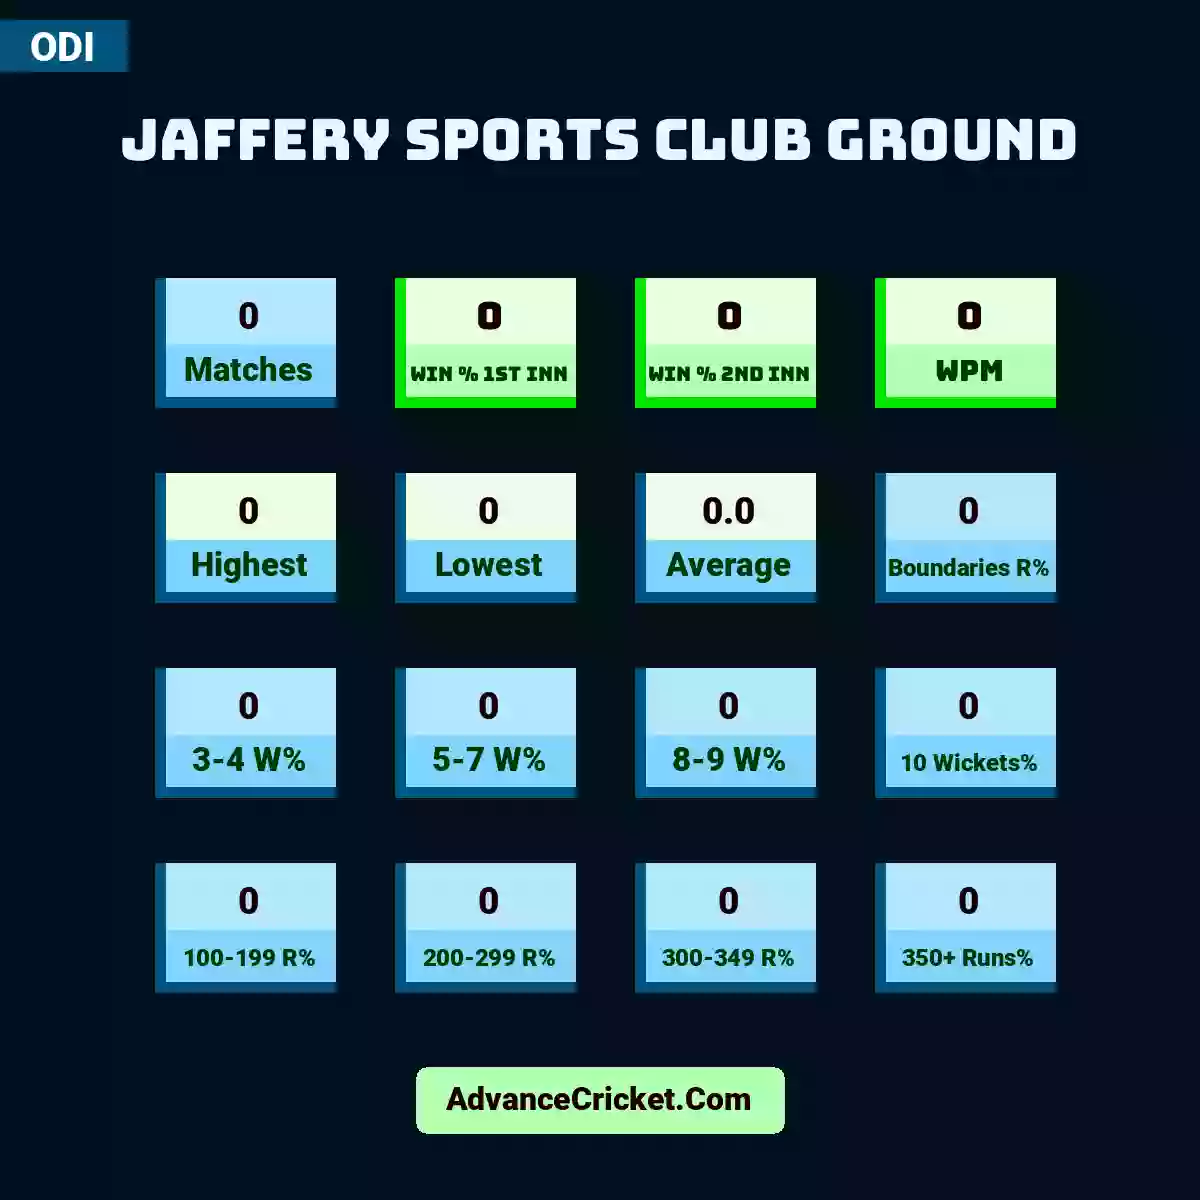 Image showing Jaffery Sports Club Ground with Matches: 0, Win % 1st Inn: 0, Win % 2nd Inn: 0, WPM: 0, Highest: 0, Lowest: 0, Average: 0.0, Boundaries R%: 0, 3-4 W%: 0, 5-7 W%: 0, 8-9 W%: 0, 10 Wickets%: 0, 100-199 R%: 0, 200-299 R%: 0, 300-349 R%: 0, 350+ Runs%: 0.